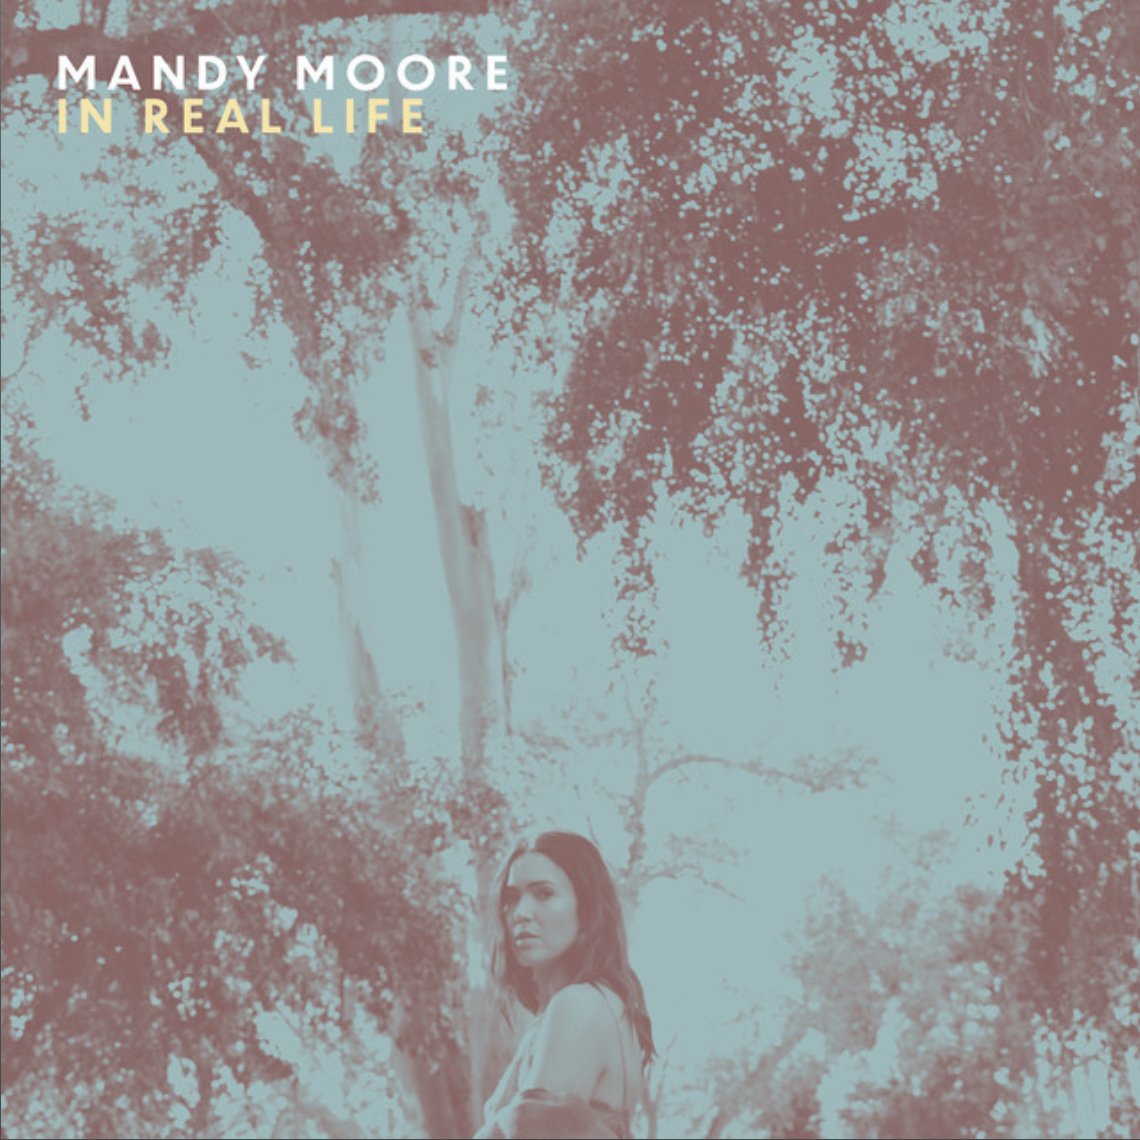 Mandy Moore-In Real Life-16BIT-WEBFLAC-2022-MyDad Download